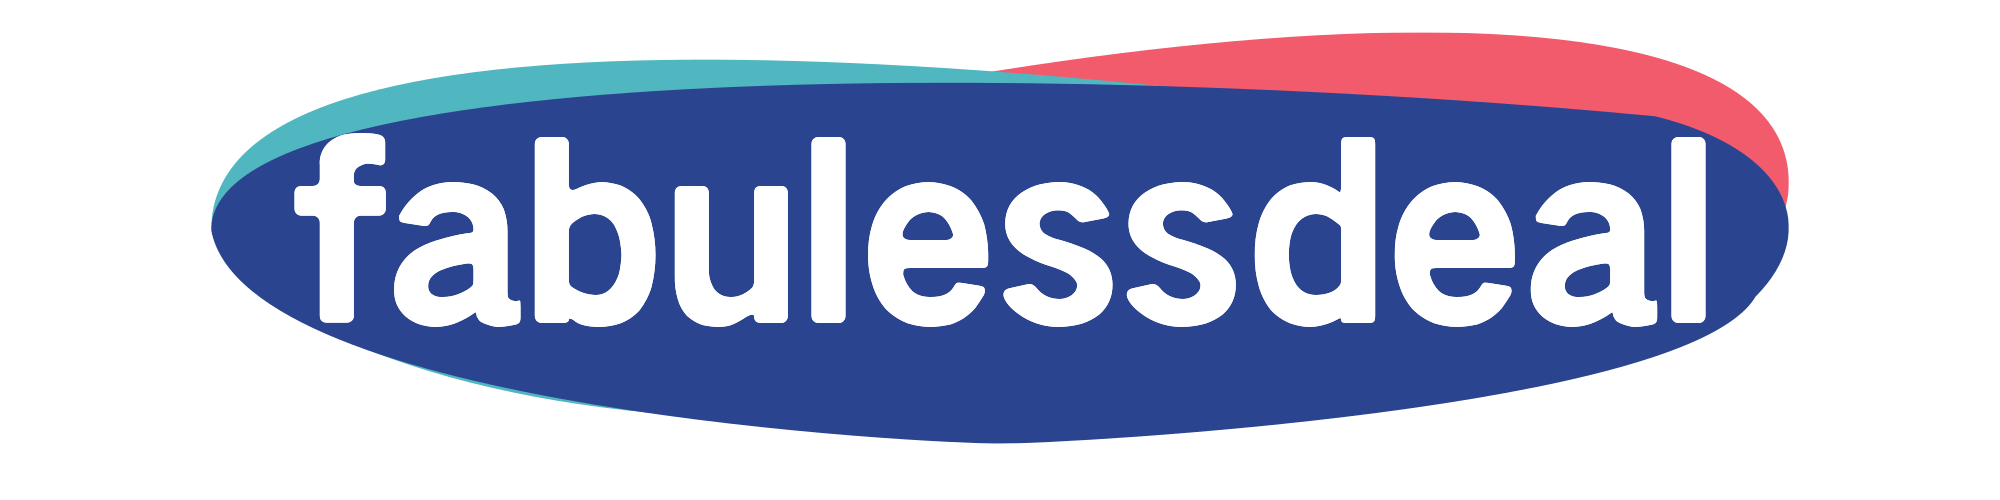 fabulessdeal – Amazon Deals & Discounts